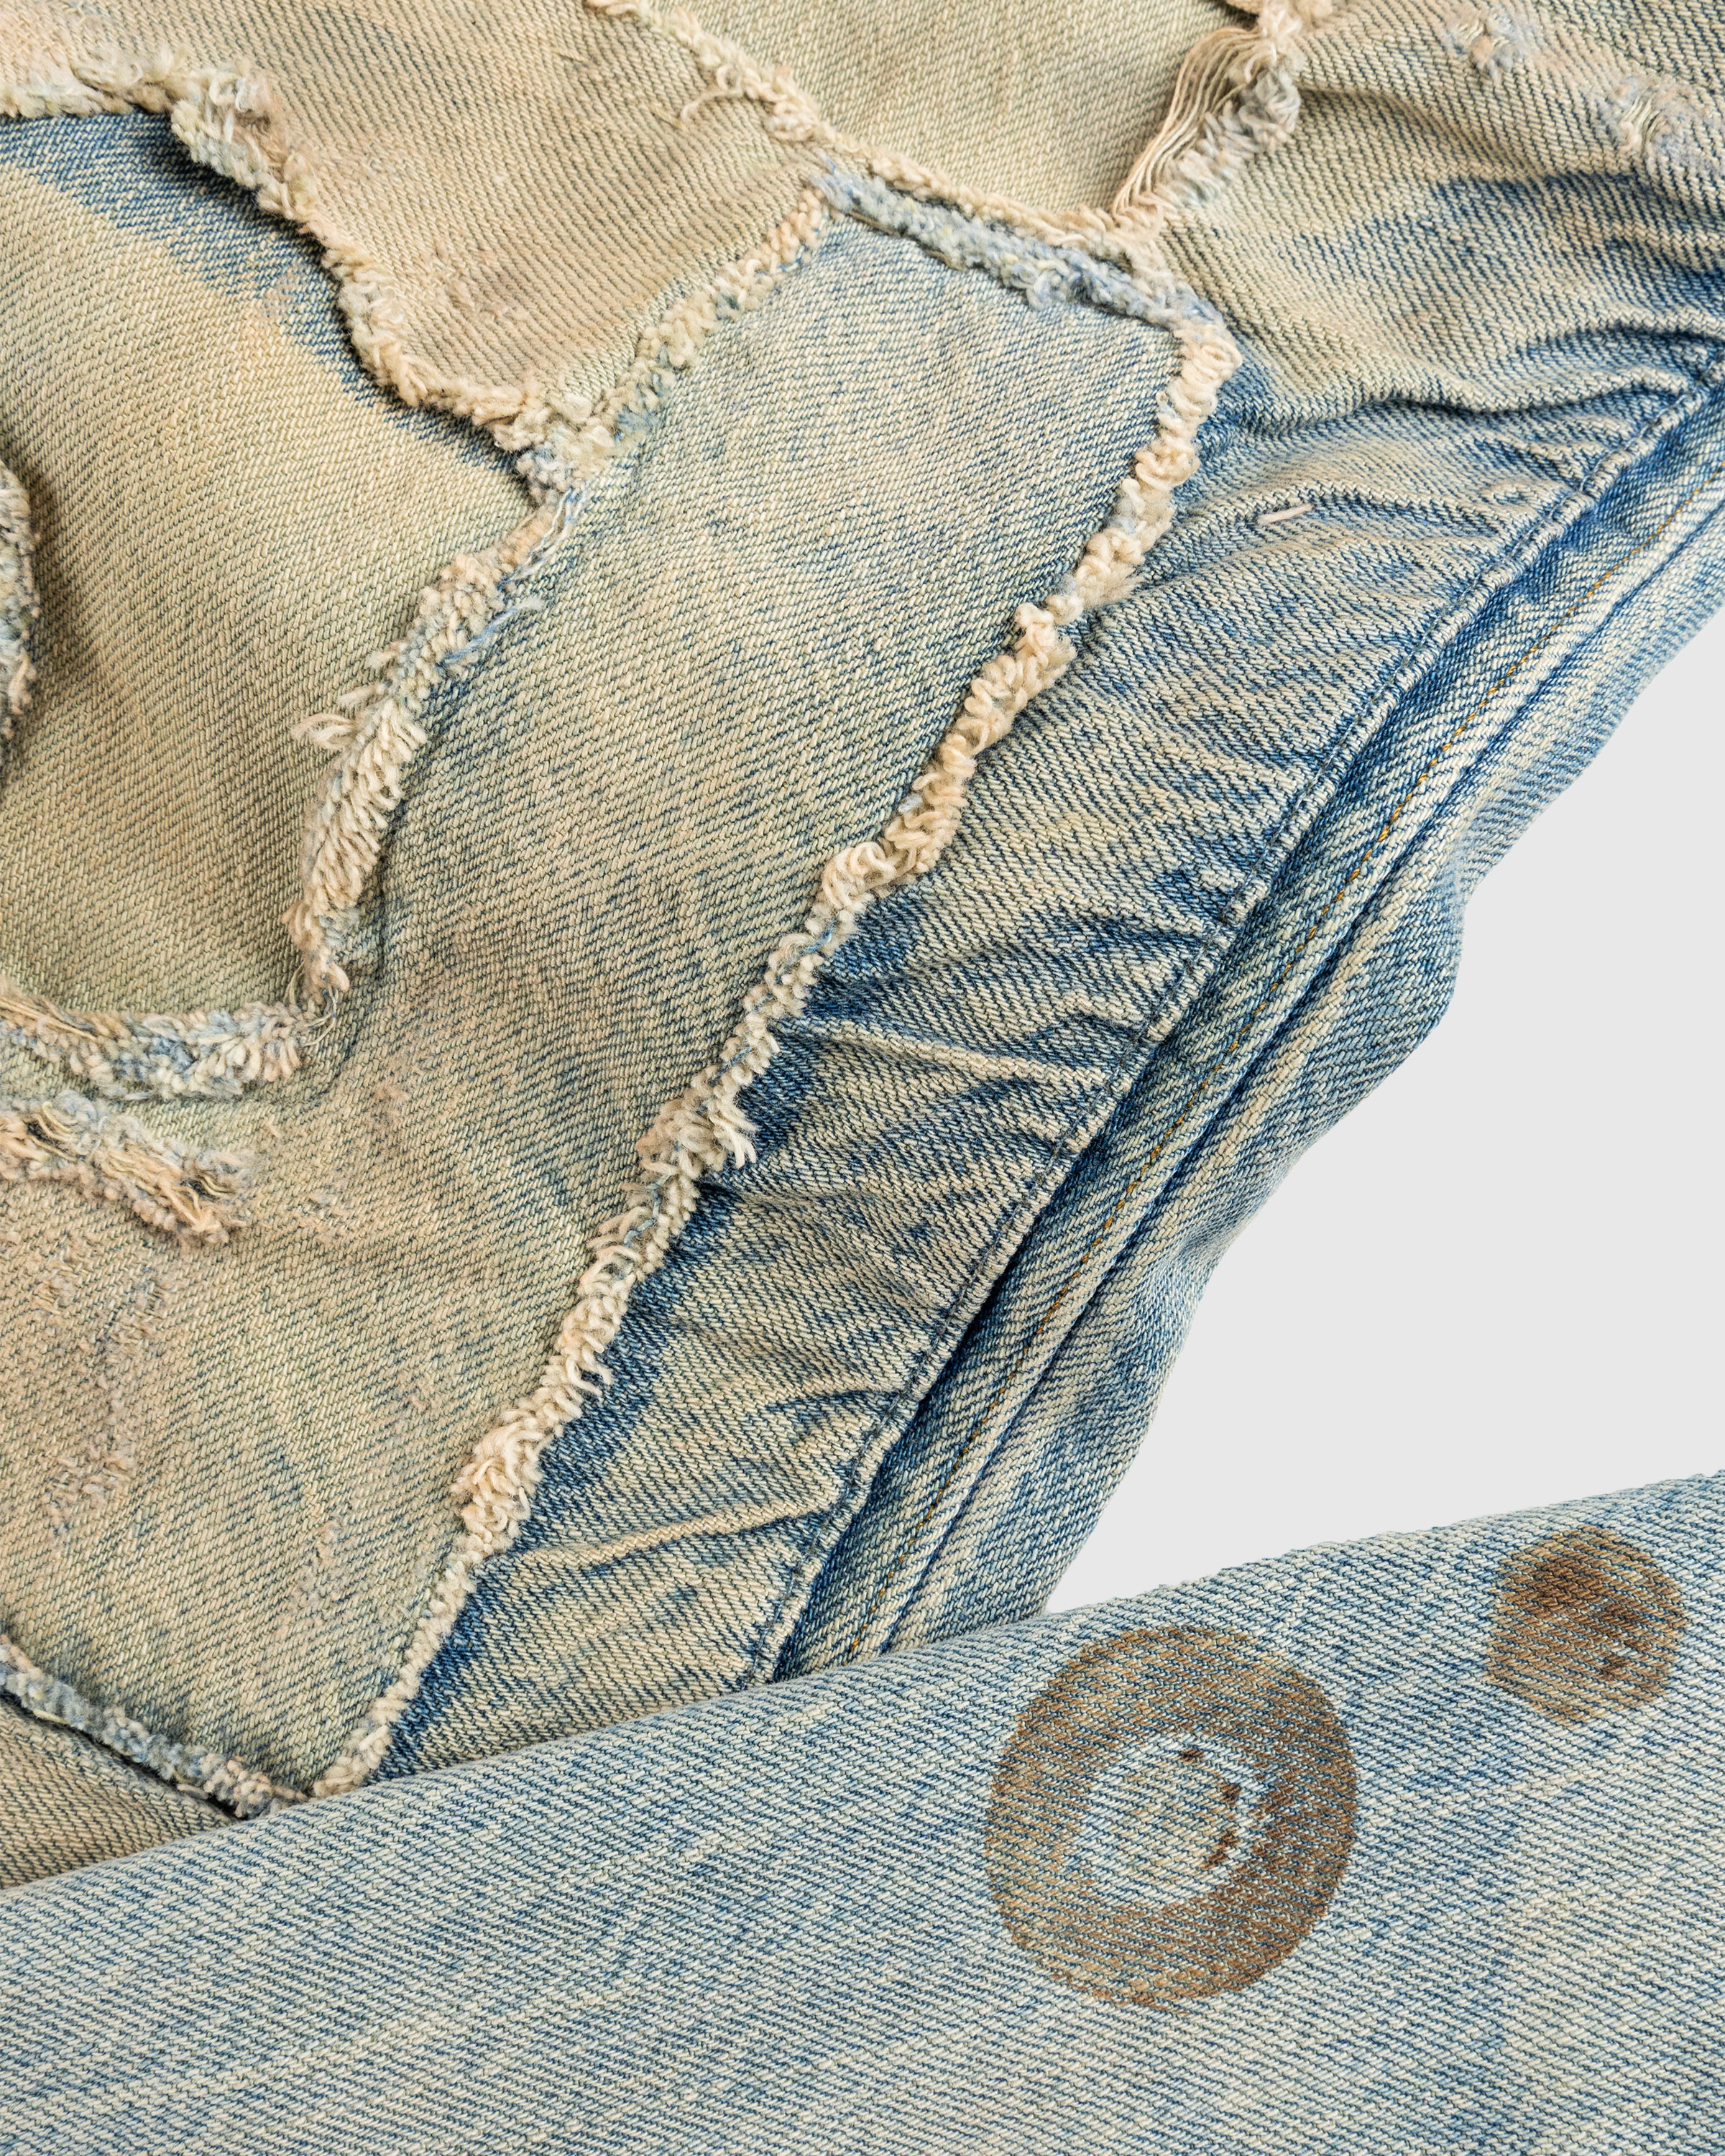 Levi's – 1917 Homer Campbell 501 Jeans Medium Indigo - Denim - Blue - Image 8